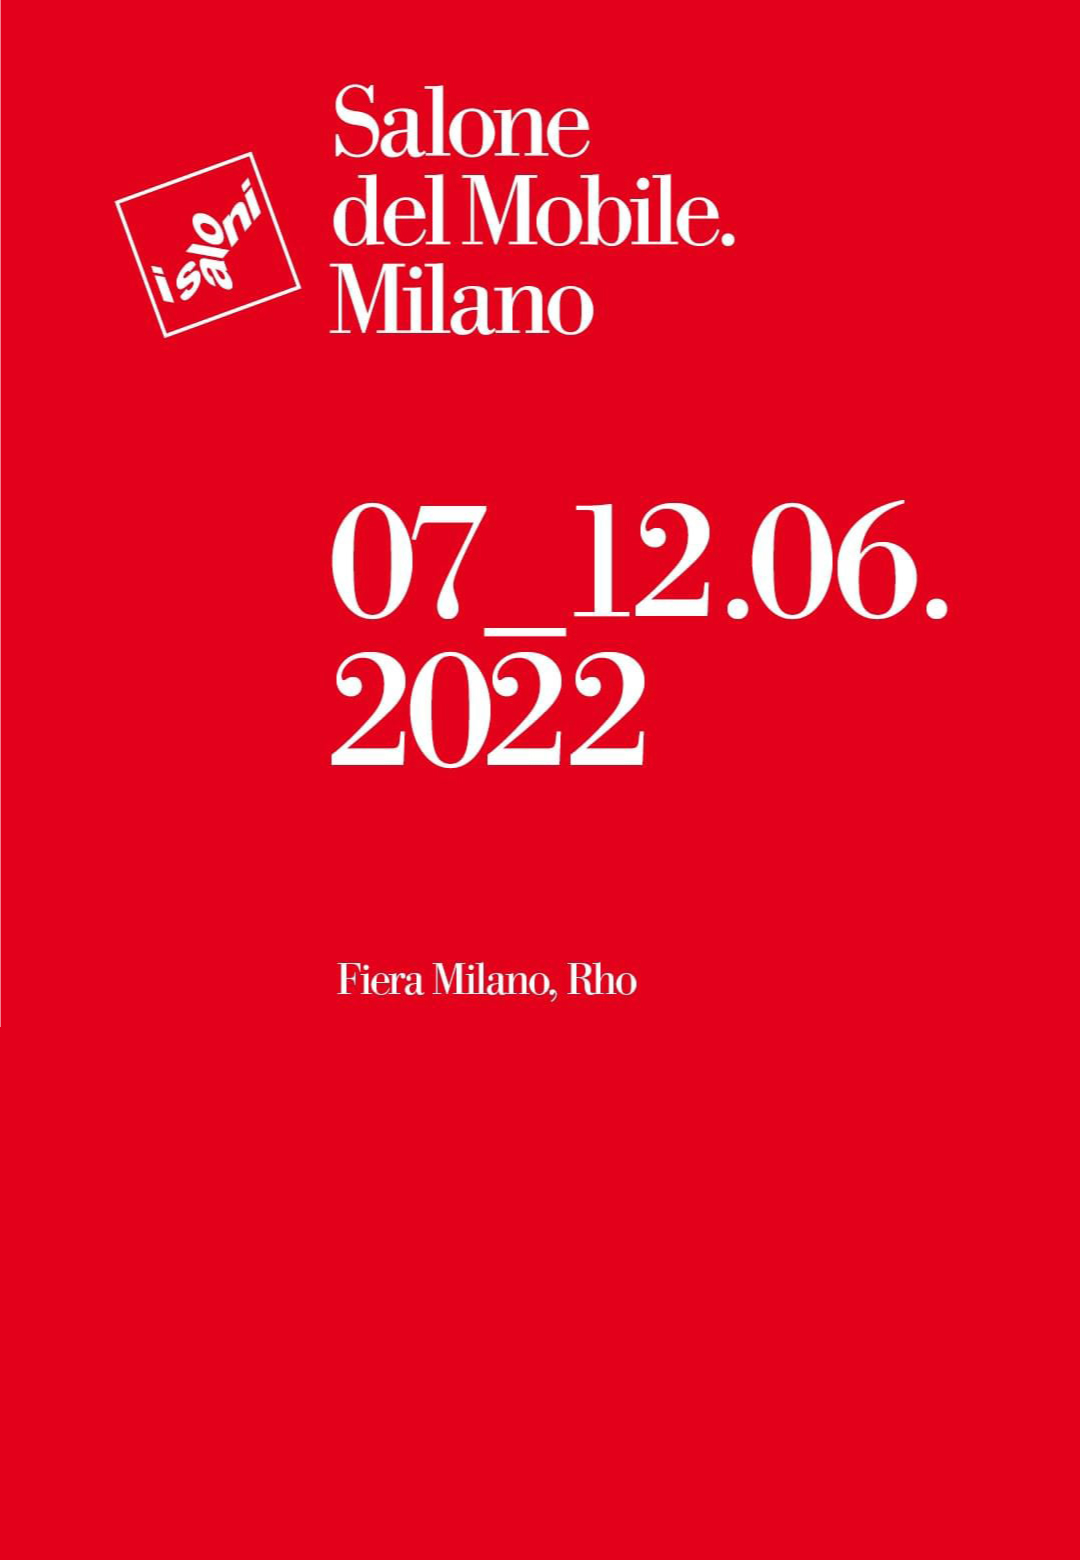 Salone del Mobile.Milano rescheduled to June 2022